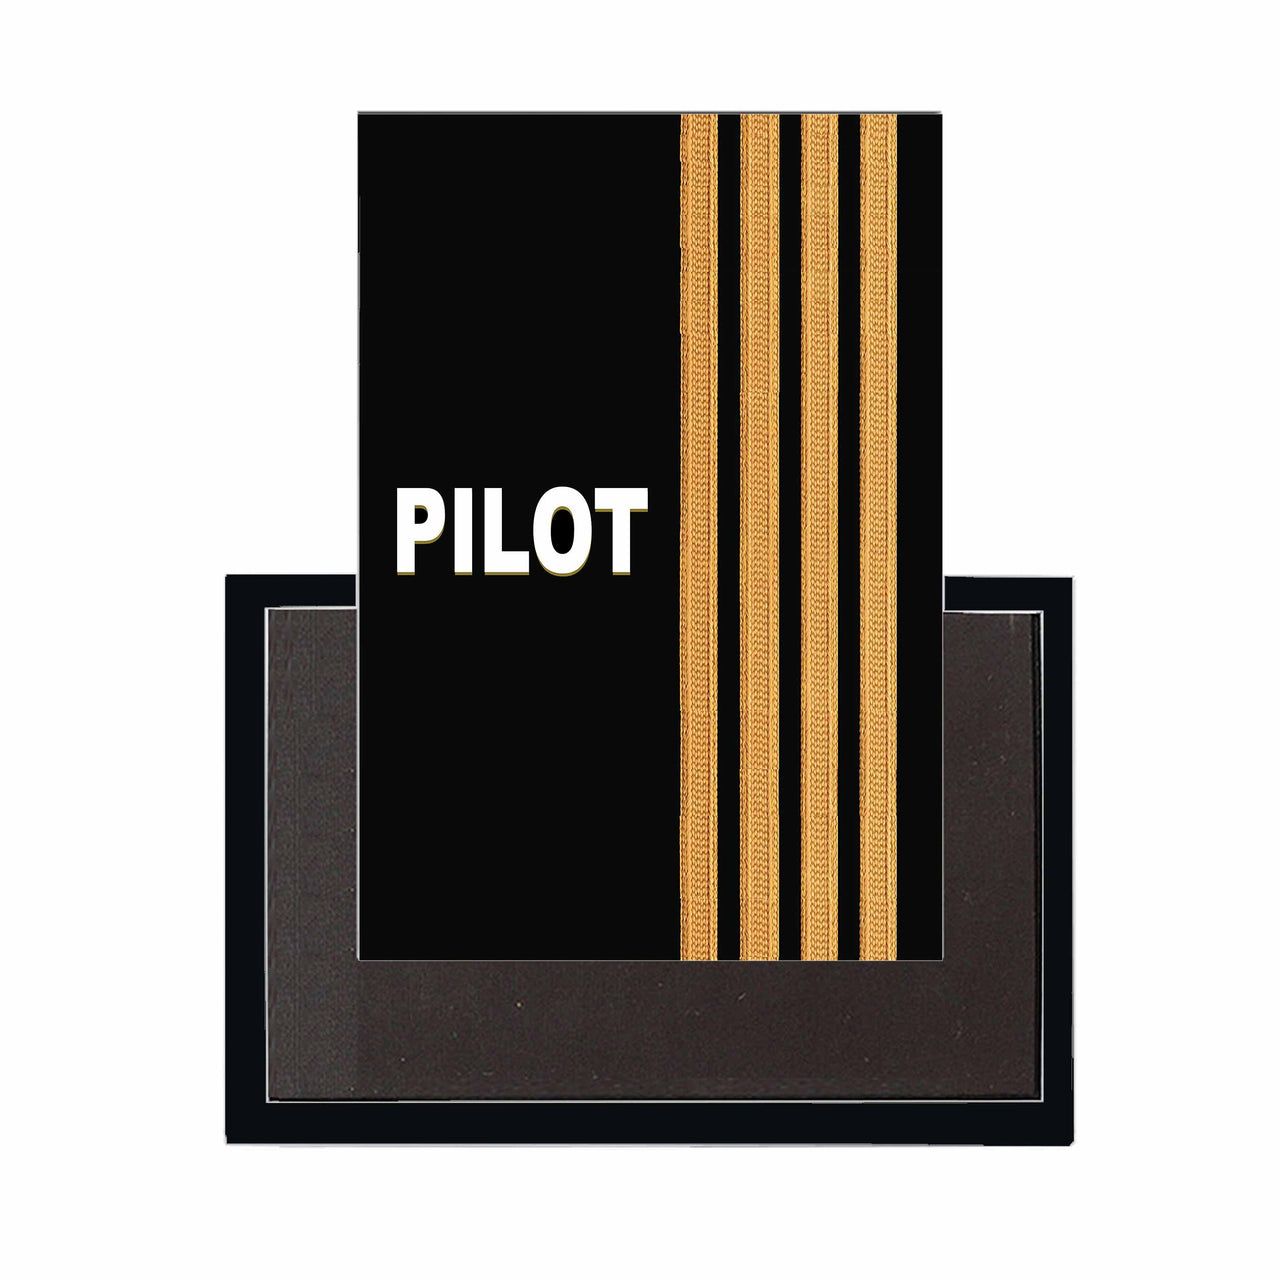 PILOT & Epaulettes 4 Lines Designed Magnets